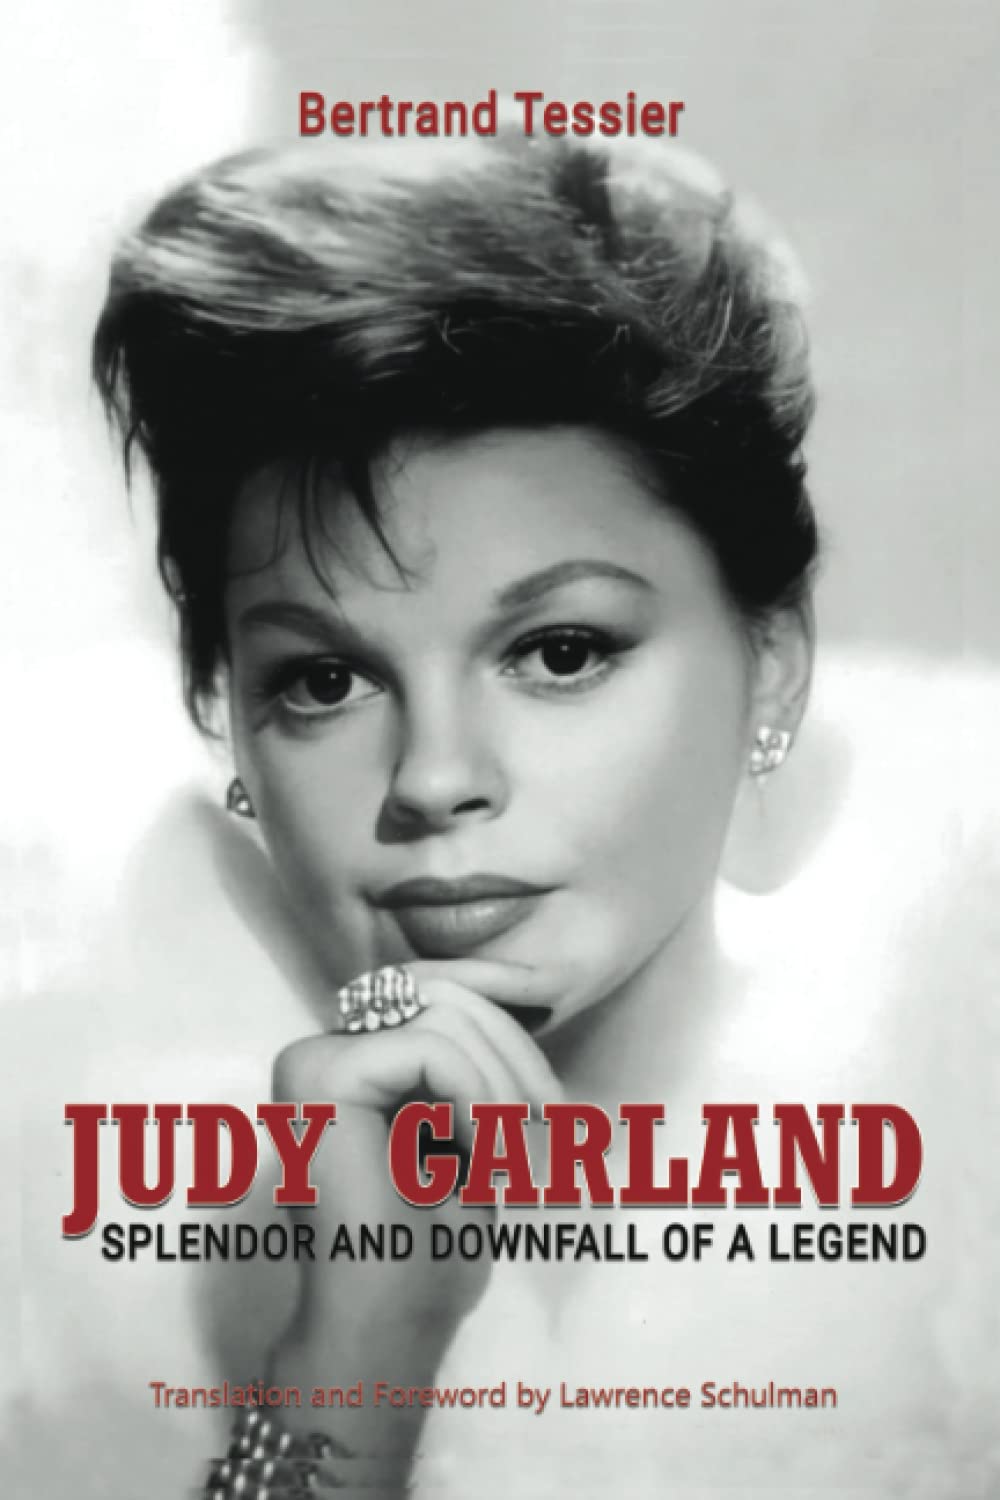 Judy Garland: Splendor and Downfall of a Legend by Bertrand Tessier by Bertrand Tessier